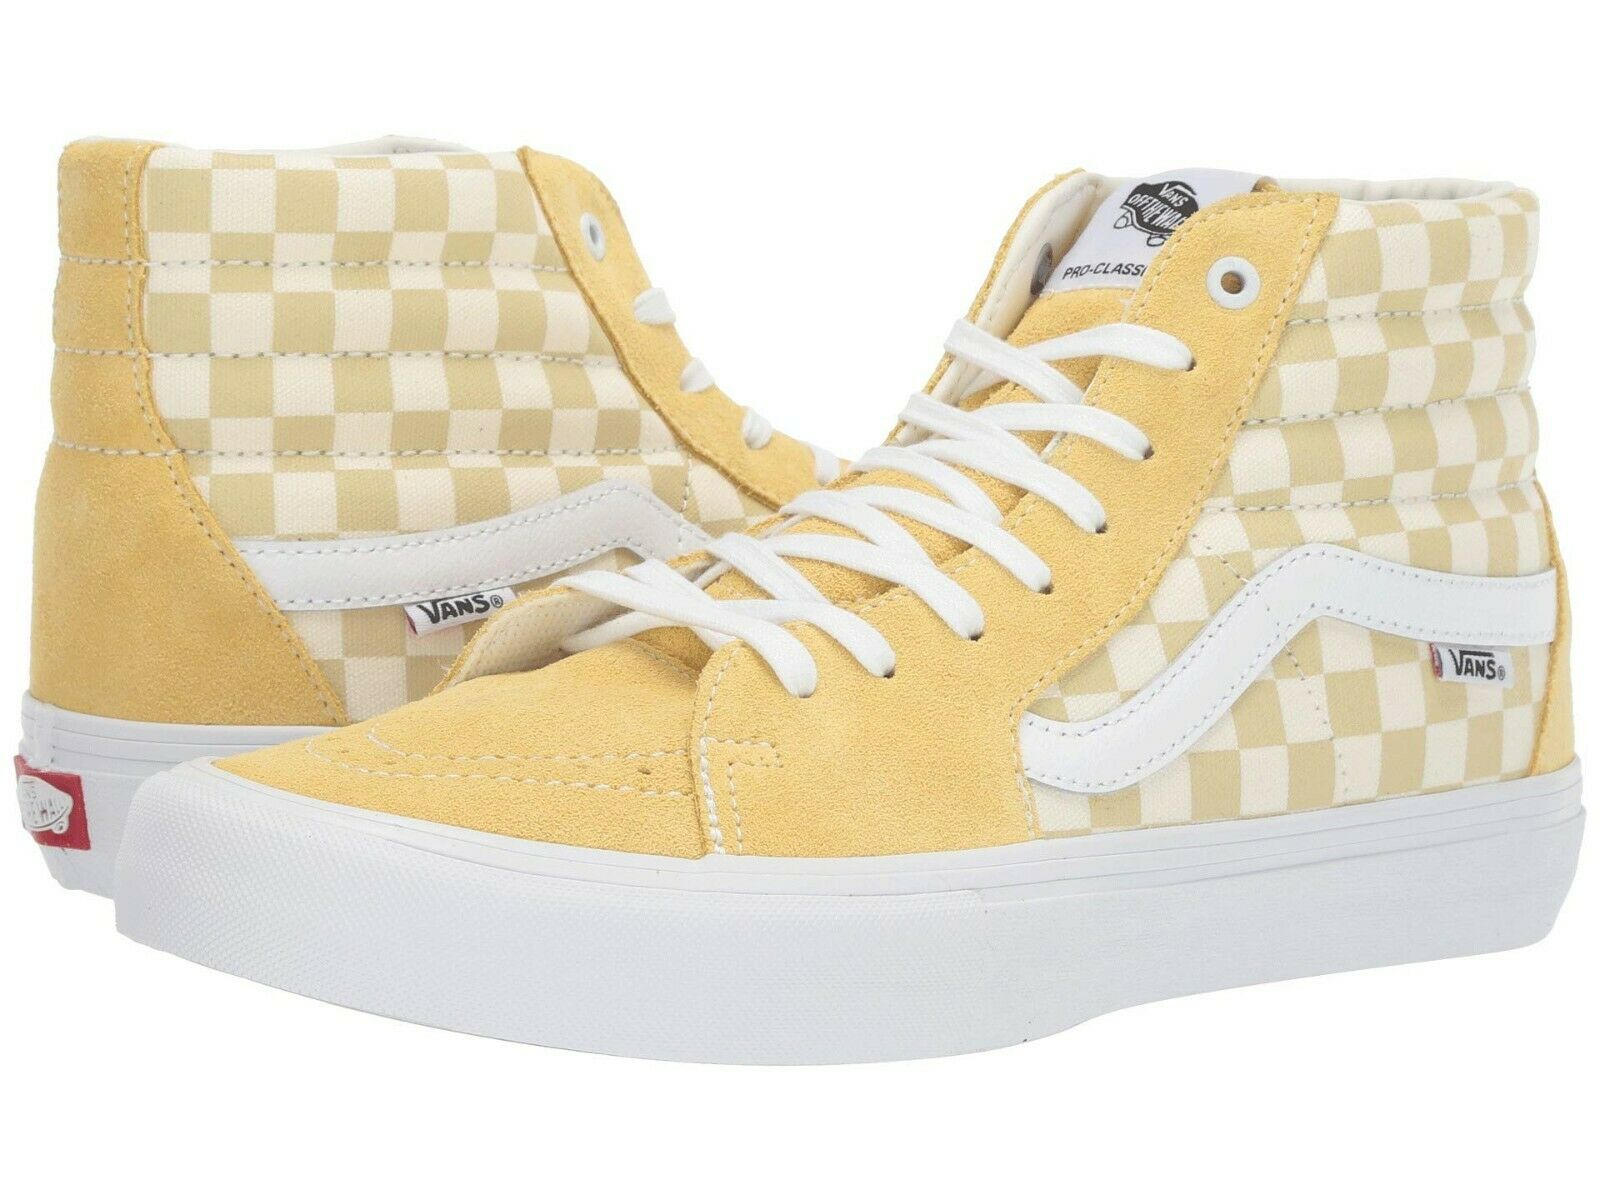 Vans SK8 Hi Pro Checkerboard Pale Banana/Marshmallow Men's Skate Shoes Size 13 - image 1 of 1